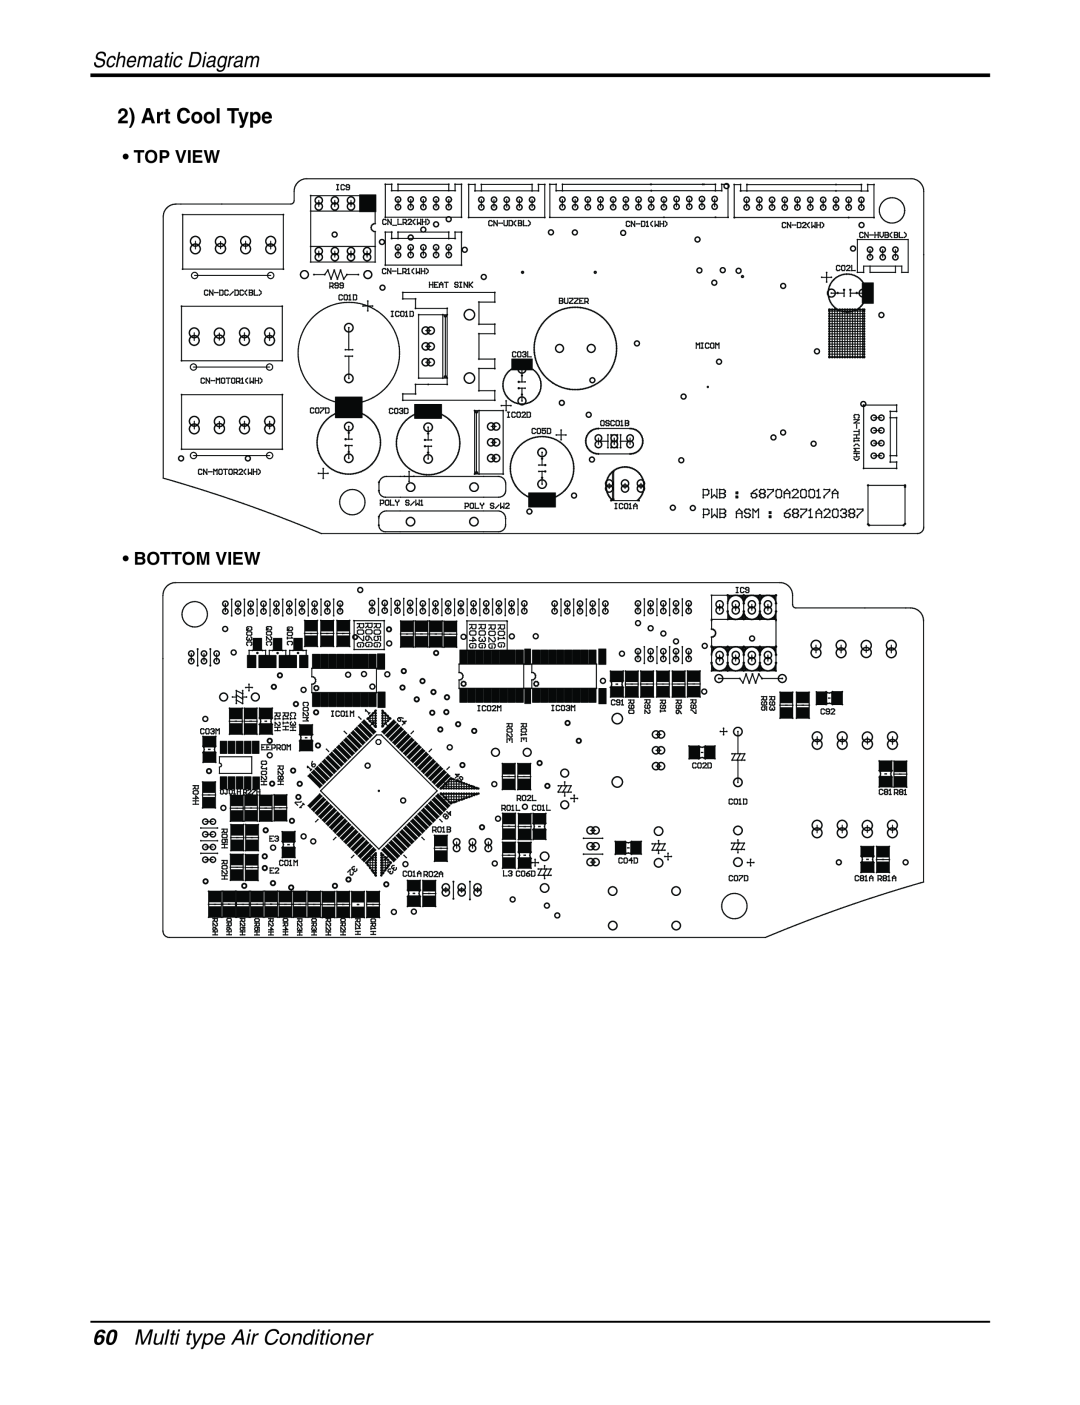 LG Electronics AMNC123DEA0 (LMN120CE) Art Cool Type, Multi type Air Conditioner, Schematic Diagram, Top View Bottom View 